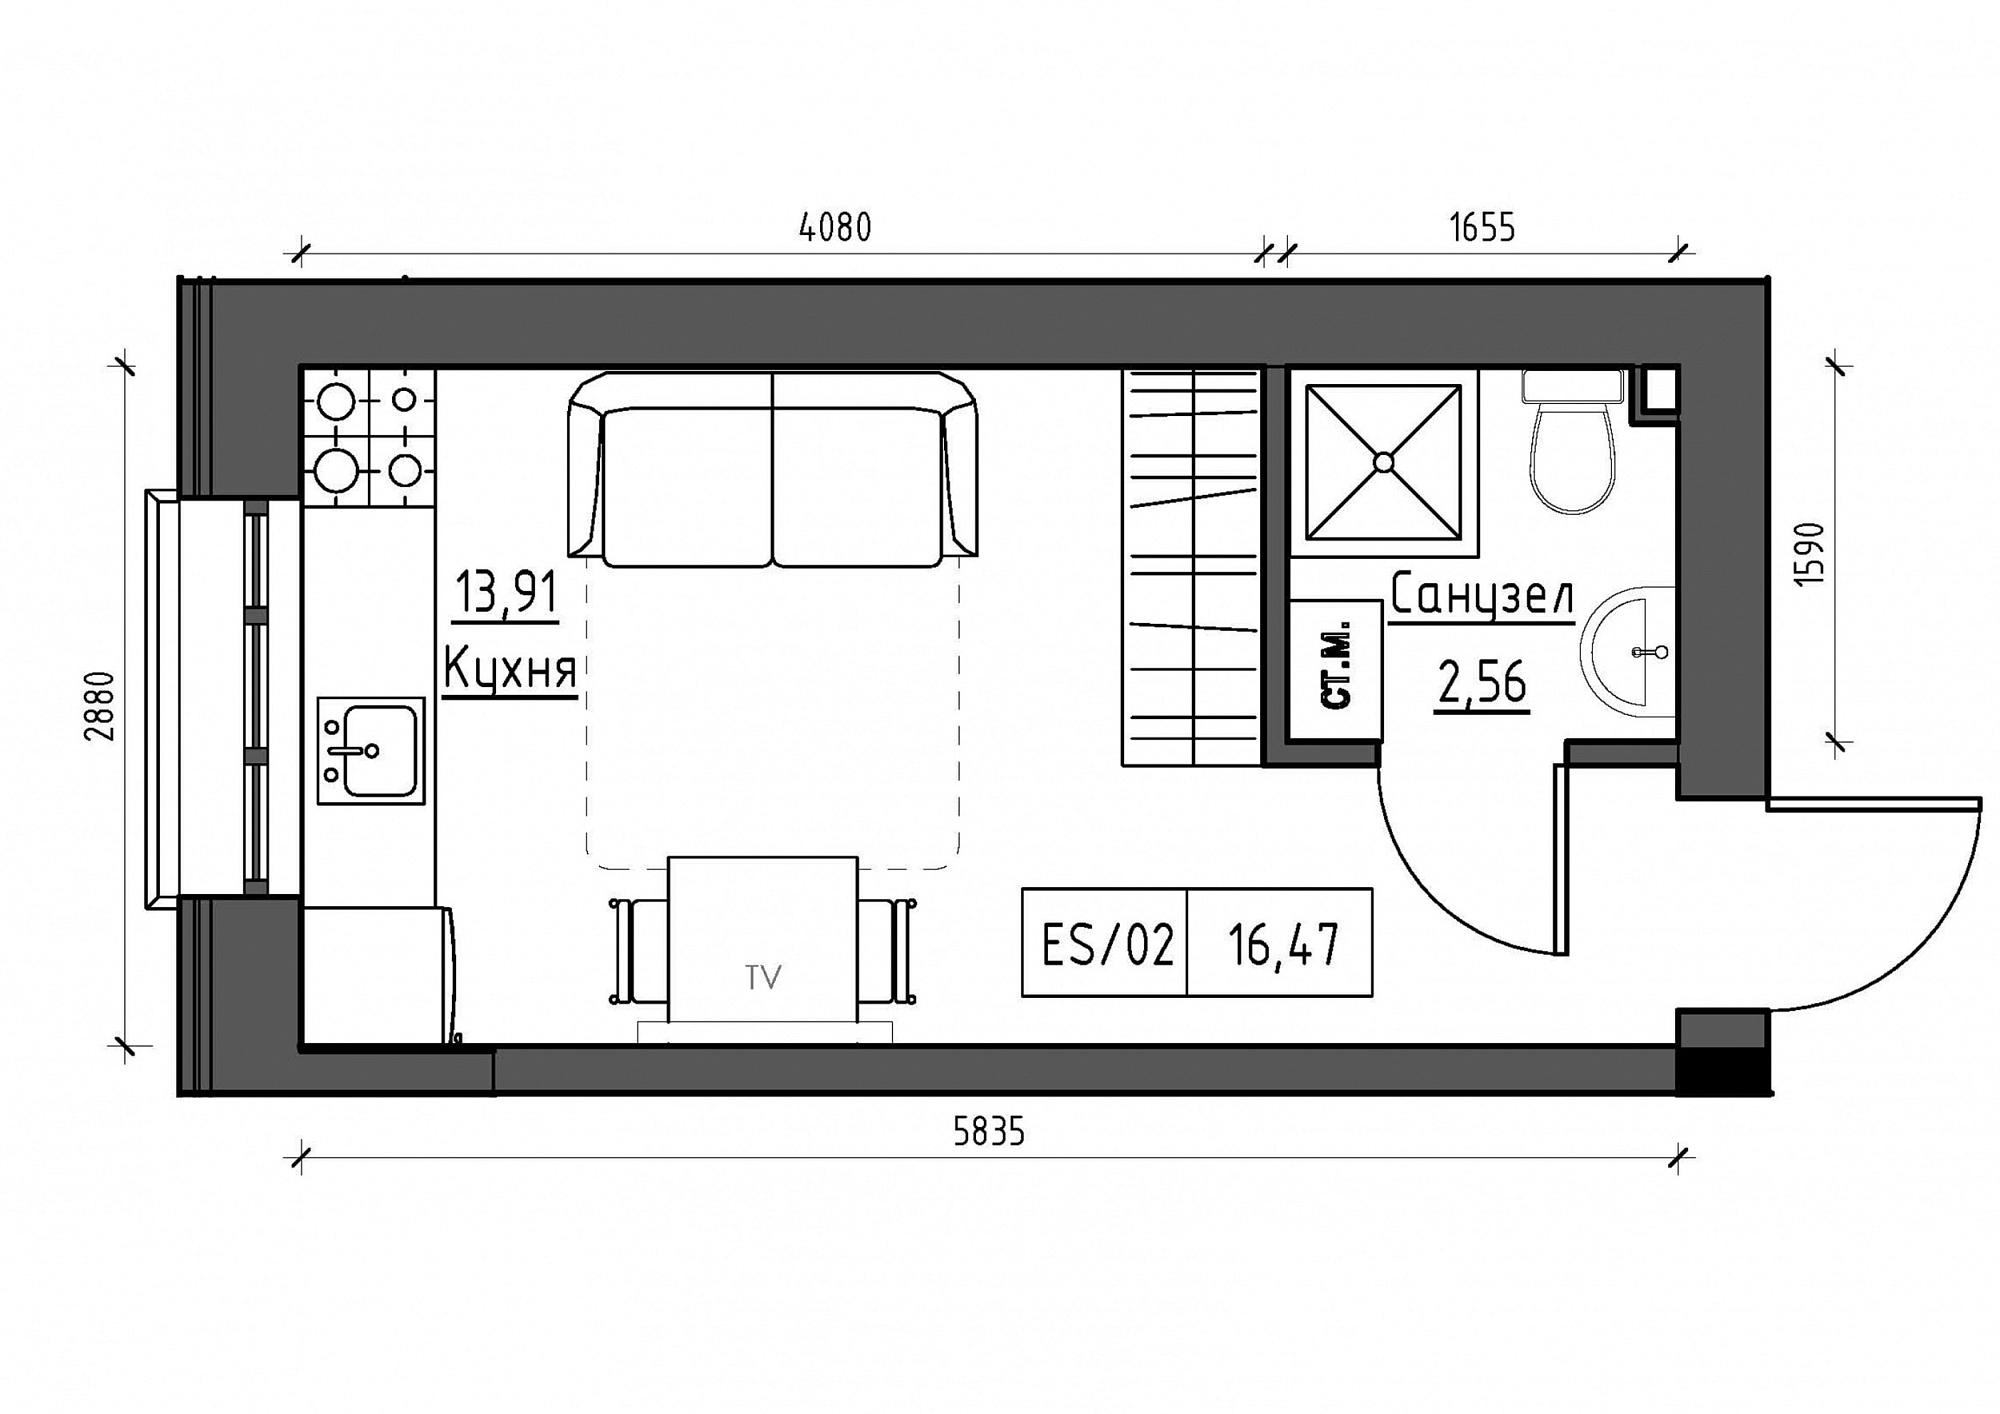 Planning Smart flats area 16.47m2, KS-012-04/0011.